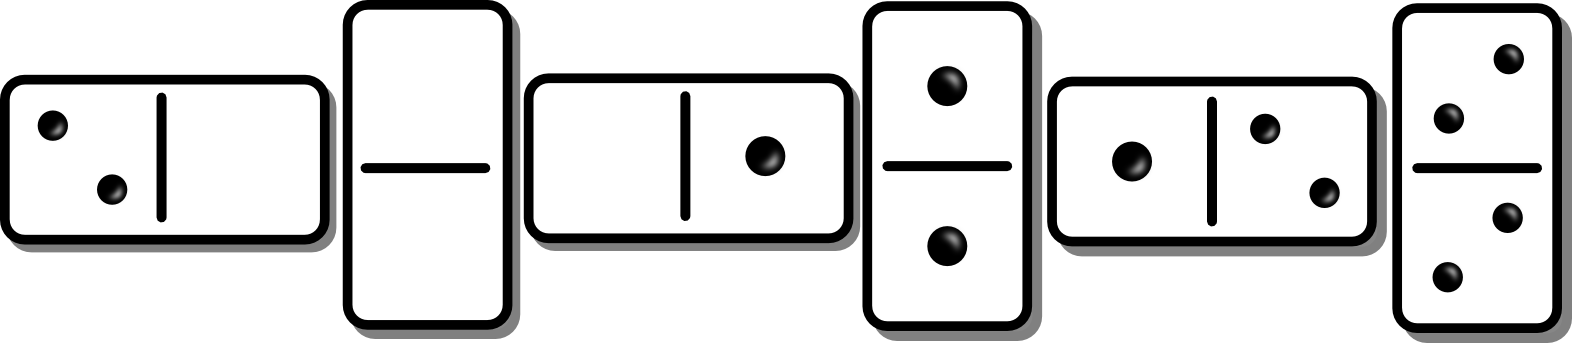 domino clipart blank domino